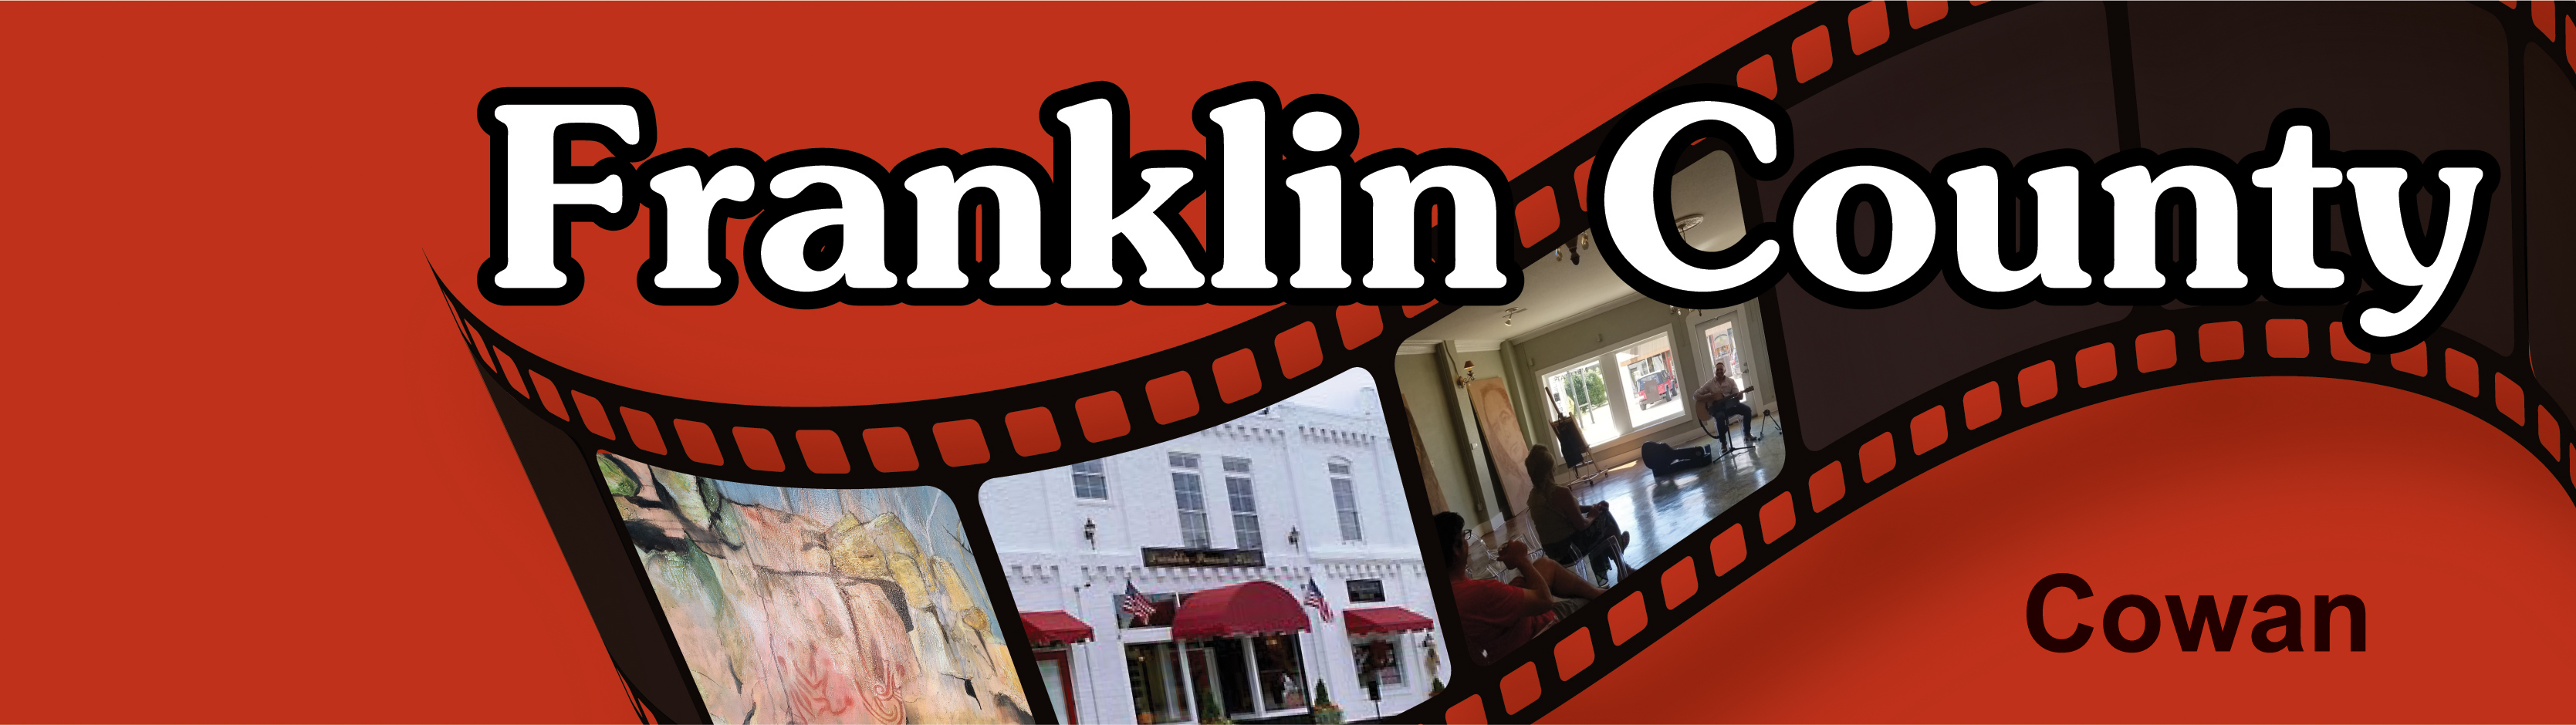 franklin county header